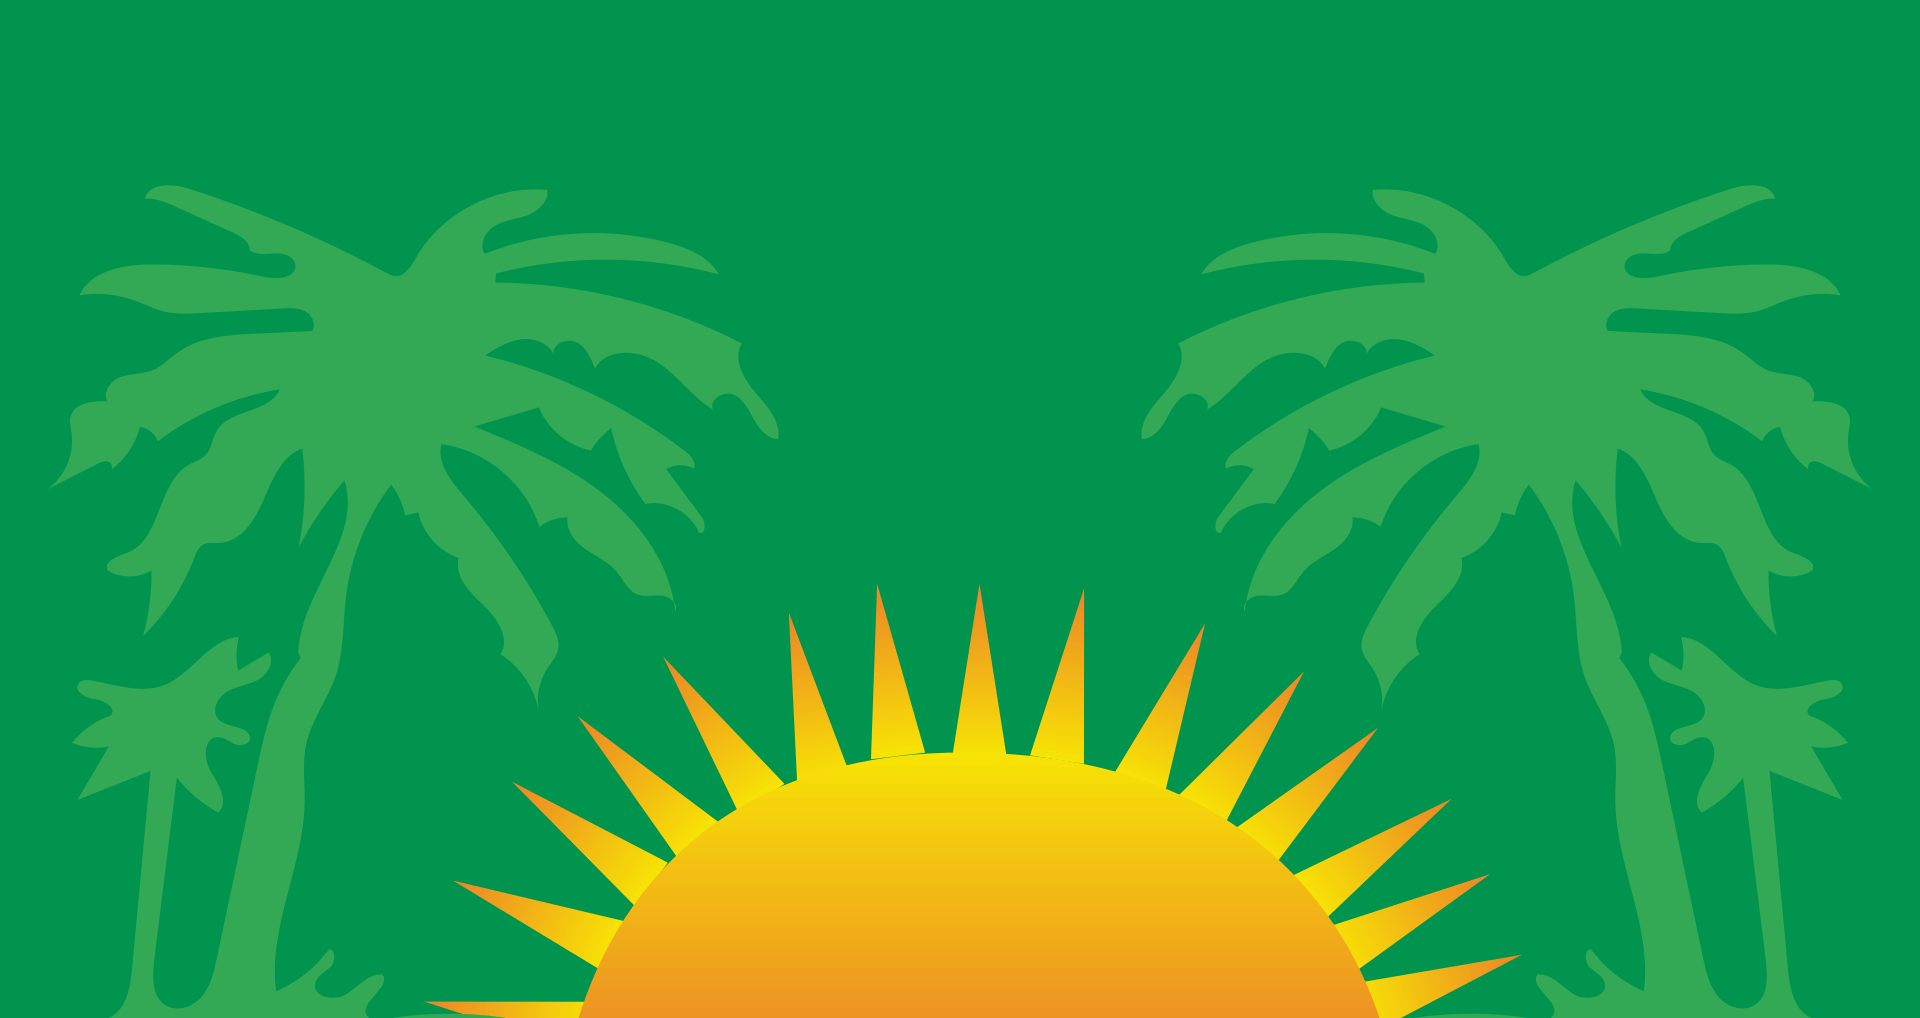 Emerald Coast Insurance Agency logo mobile version png